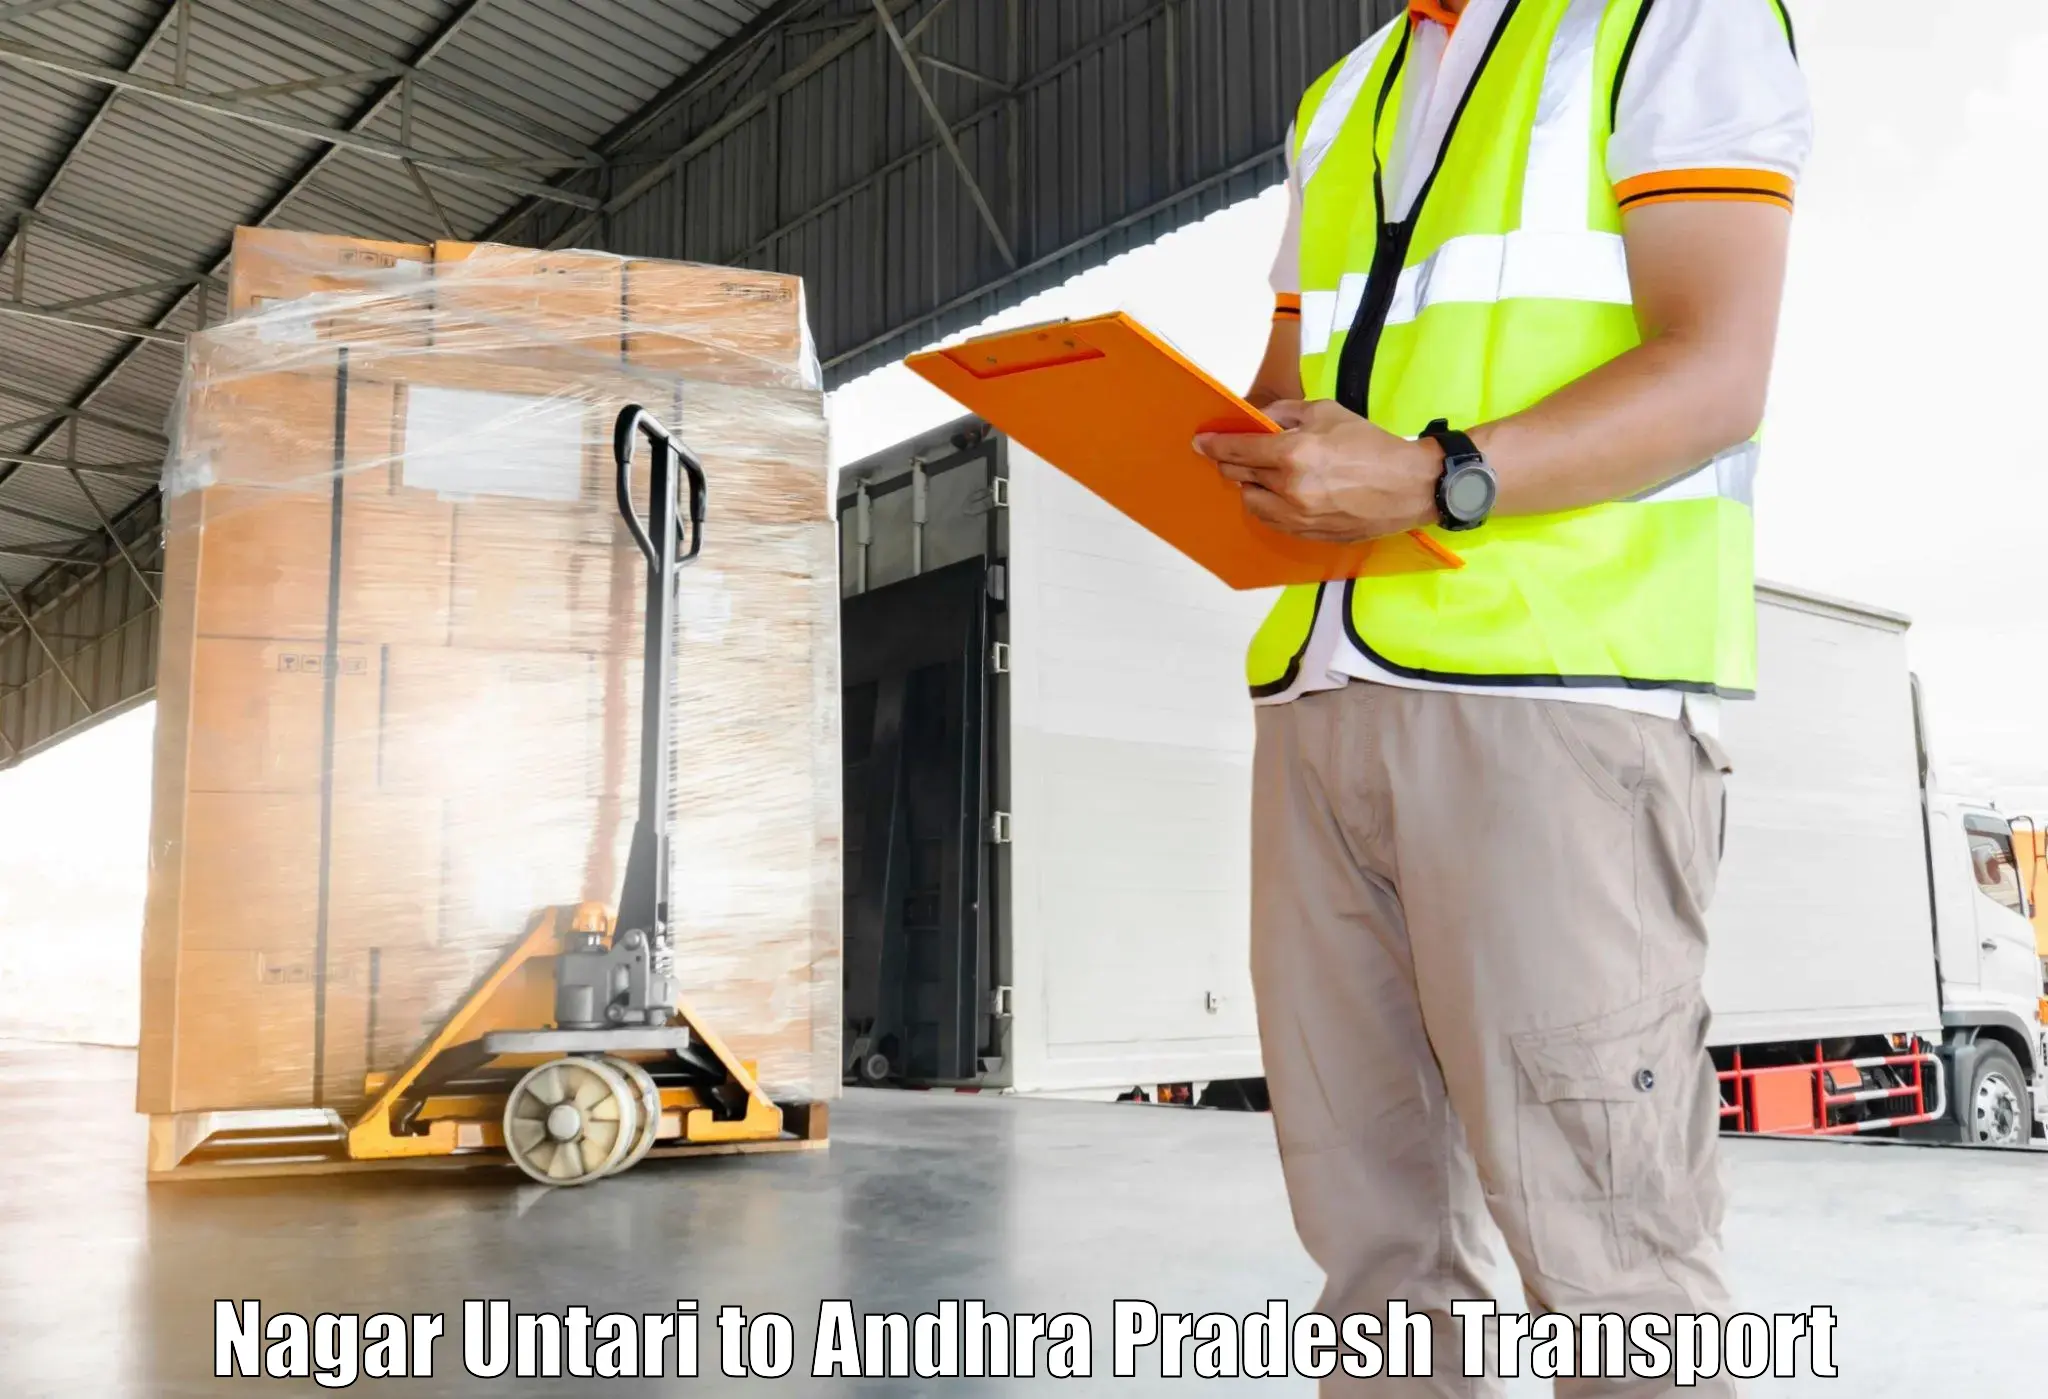 Delivery service in Nagar Untari to Narsipatnam